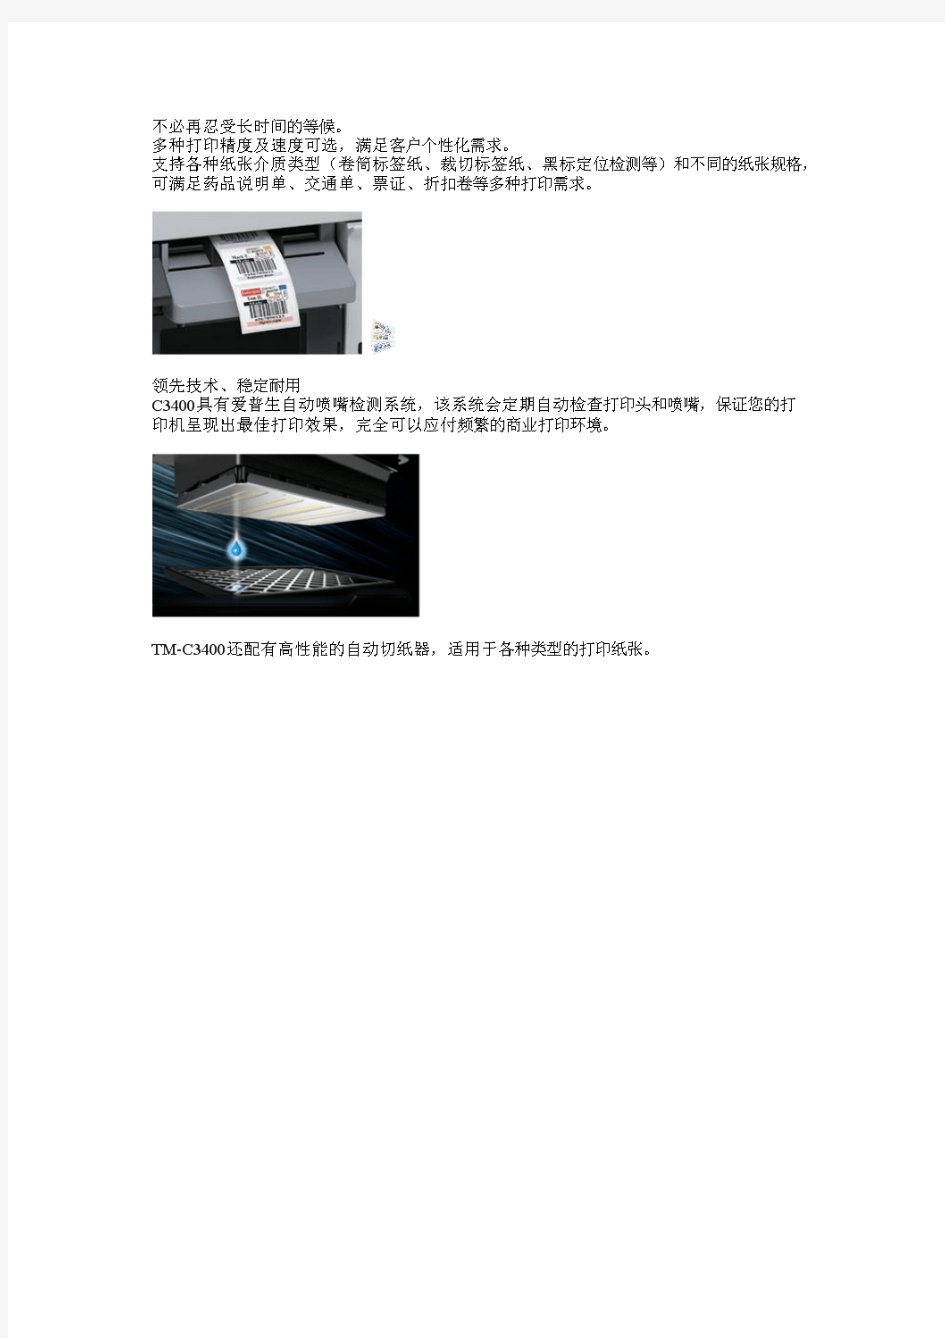 EPSONTM-C3400全色喷墨标签打印机概述(20190224063413)